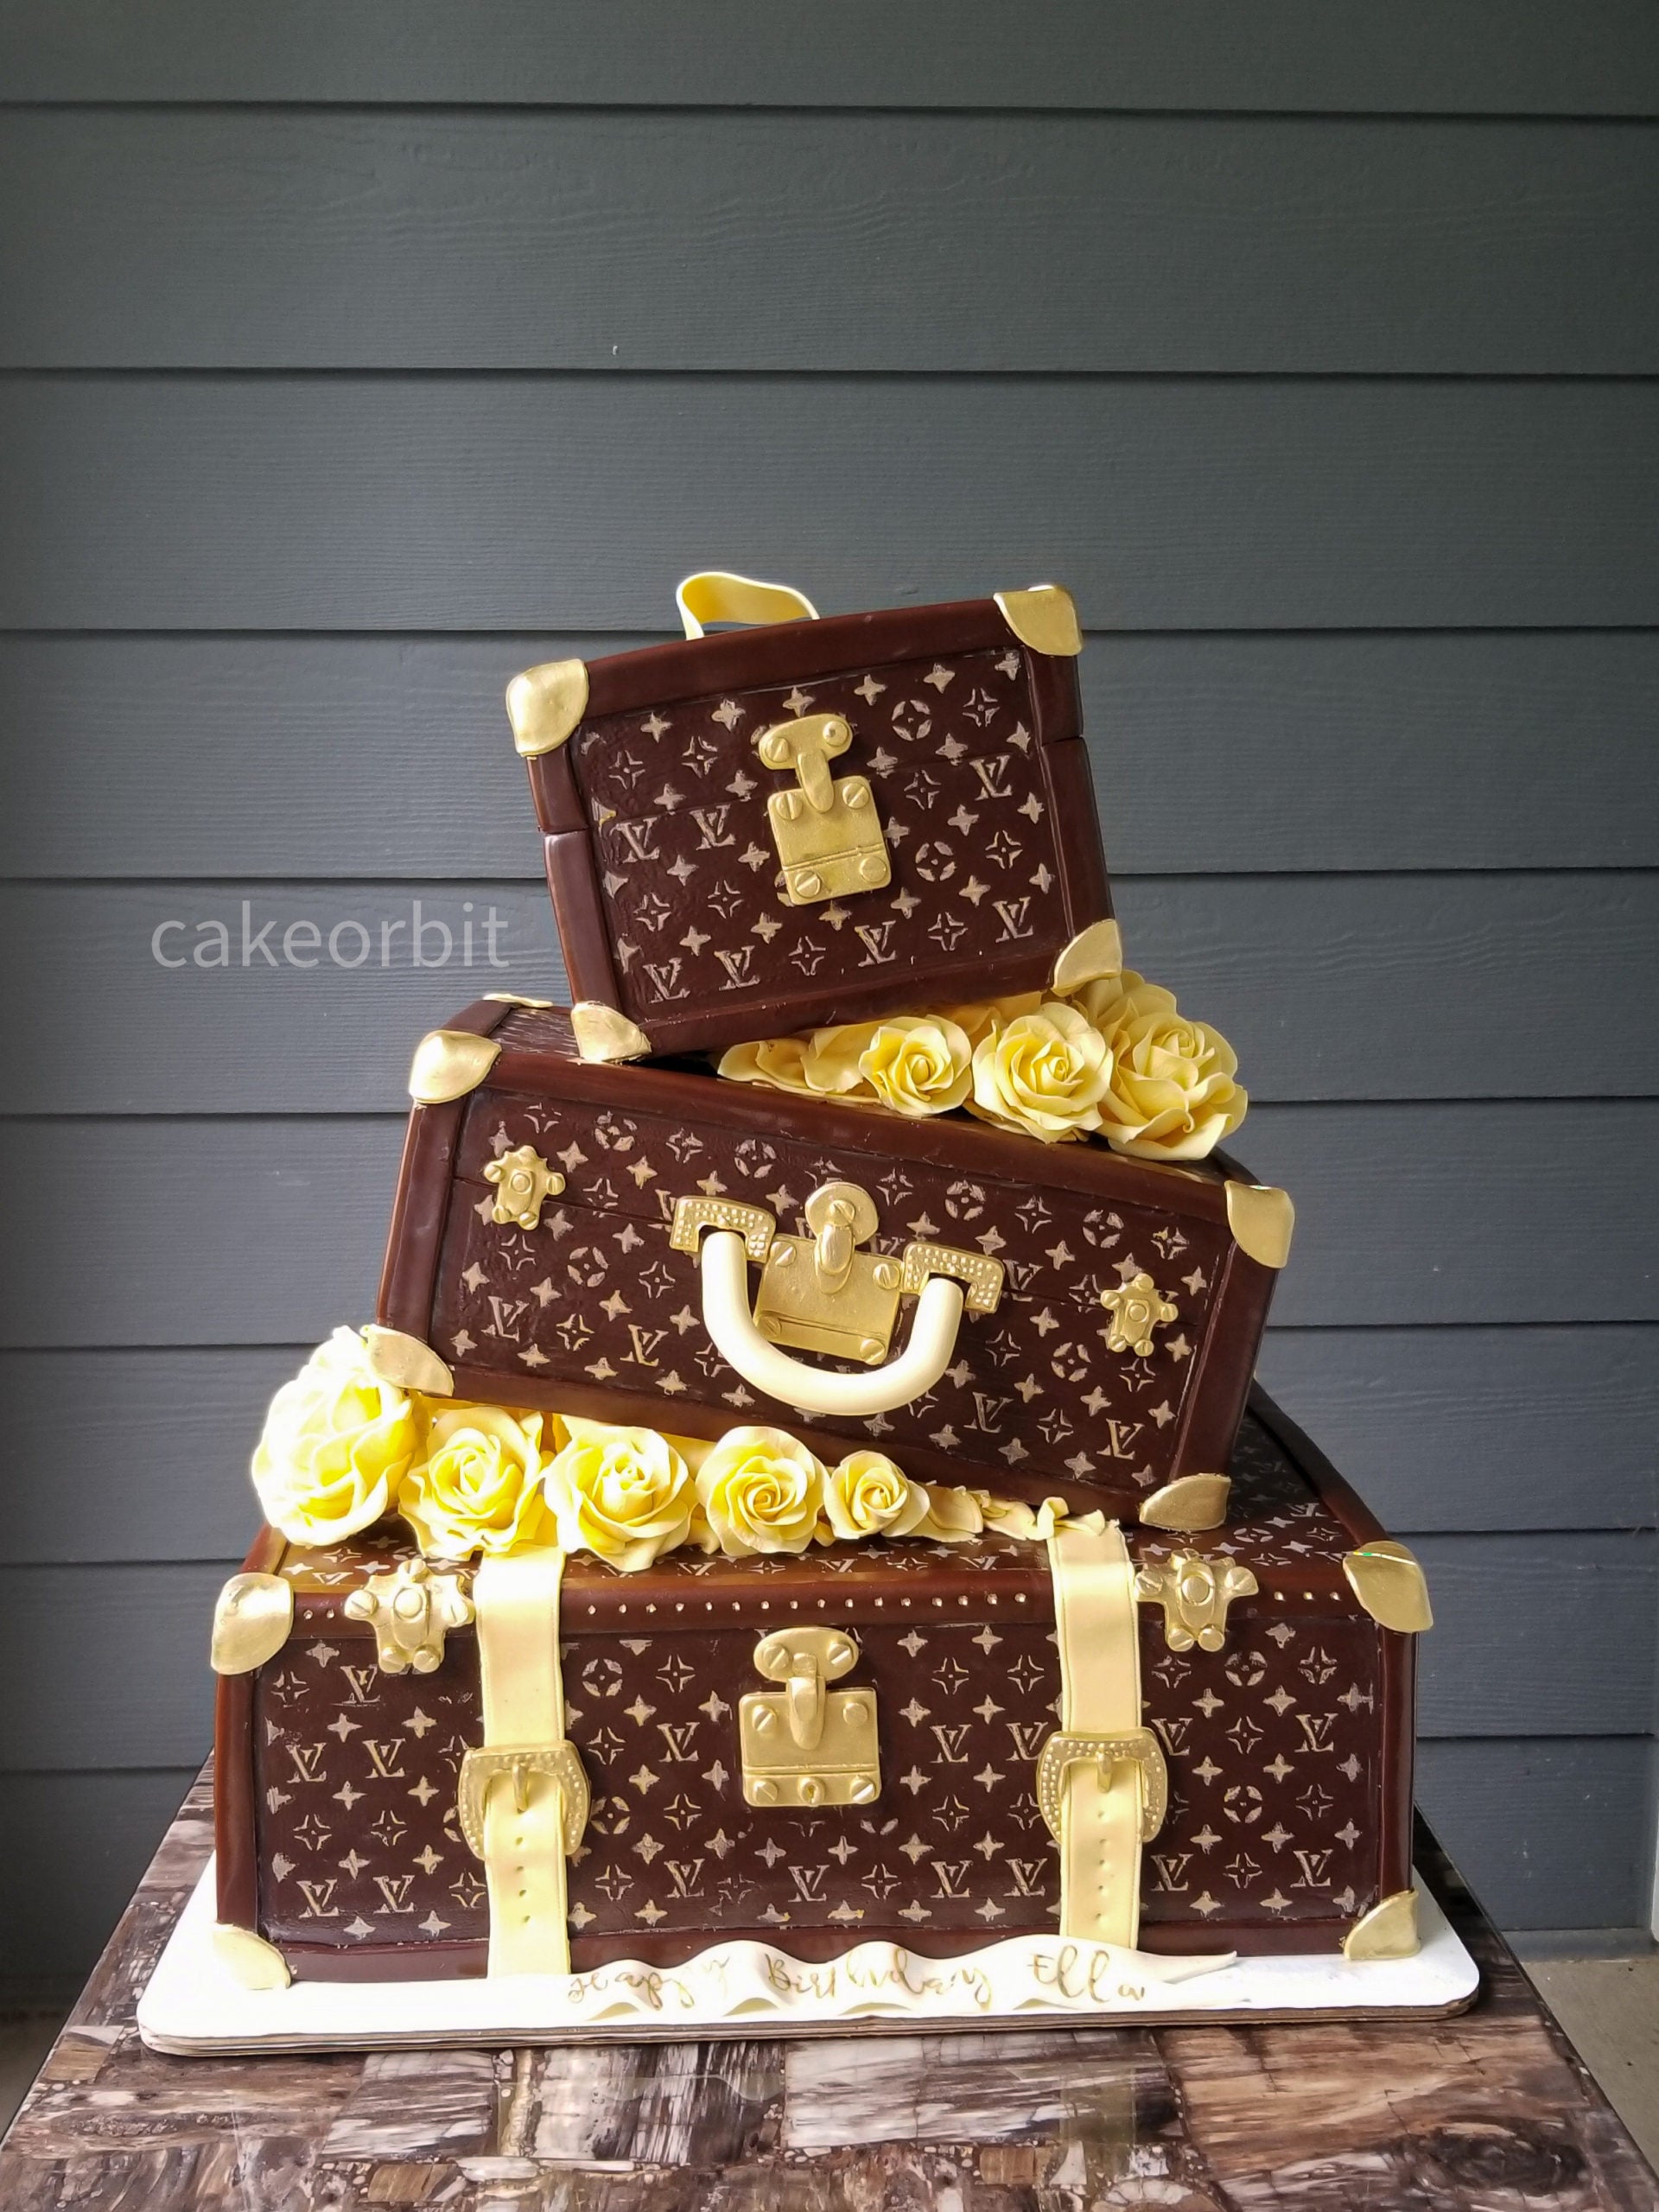 Working on this Customized Louis Vuitton Cake inspired cake #louisvu, cakes